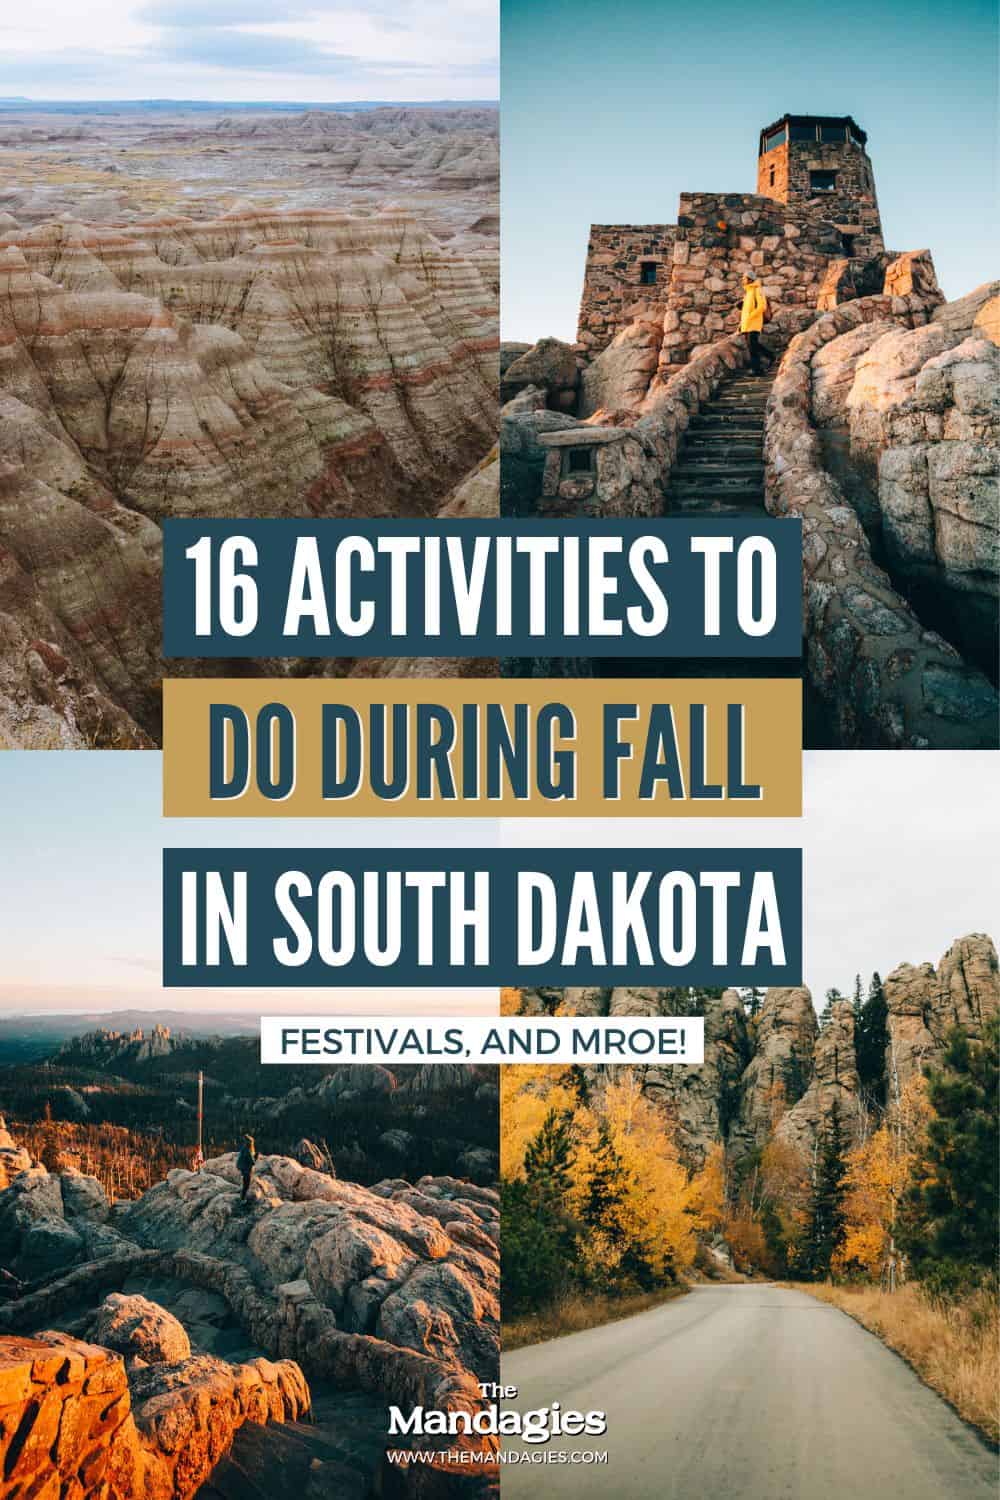 Activities To Do During Fall in South Dakota - The Mandagies Pinterest Pin 4